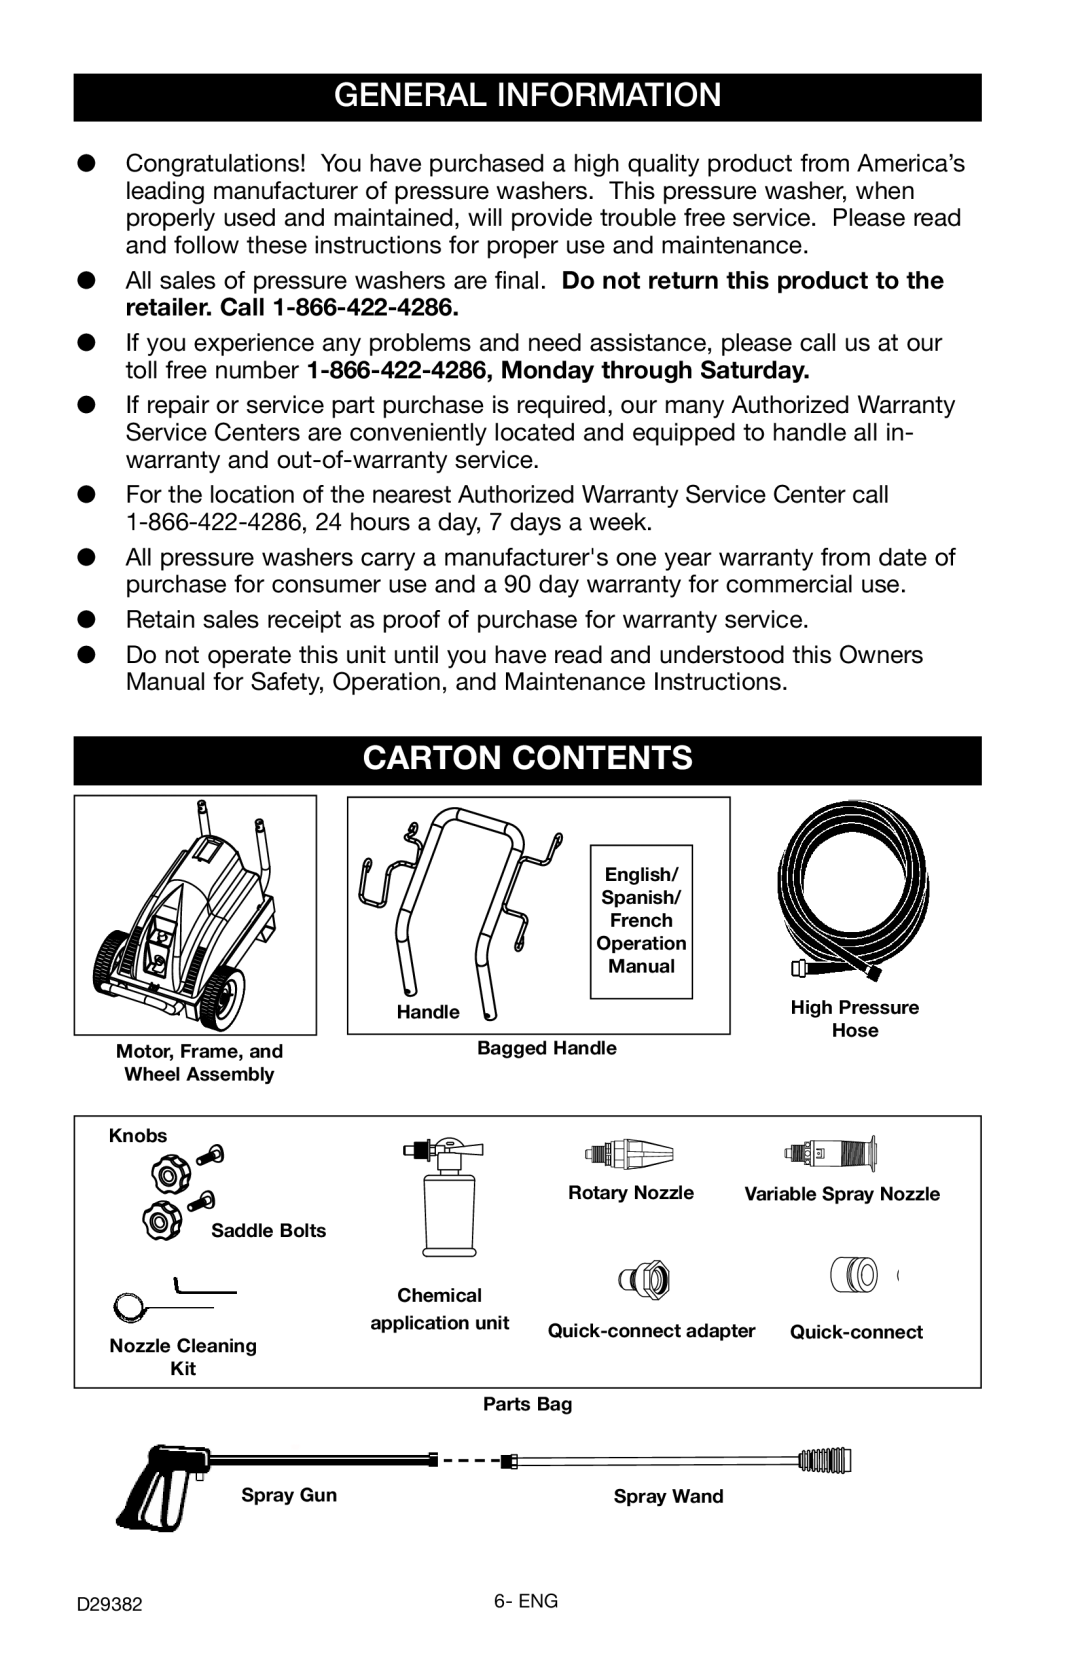 Delta D29382 instruction manual General Information, Carton Contents 